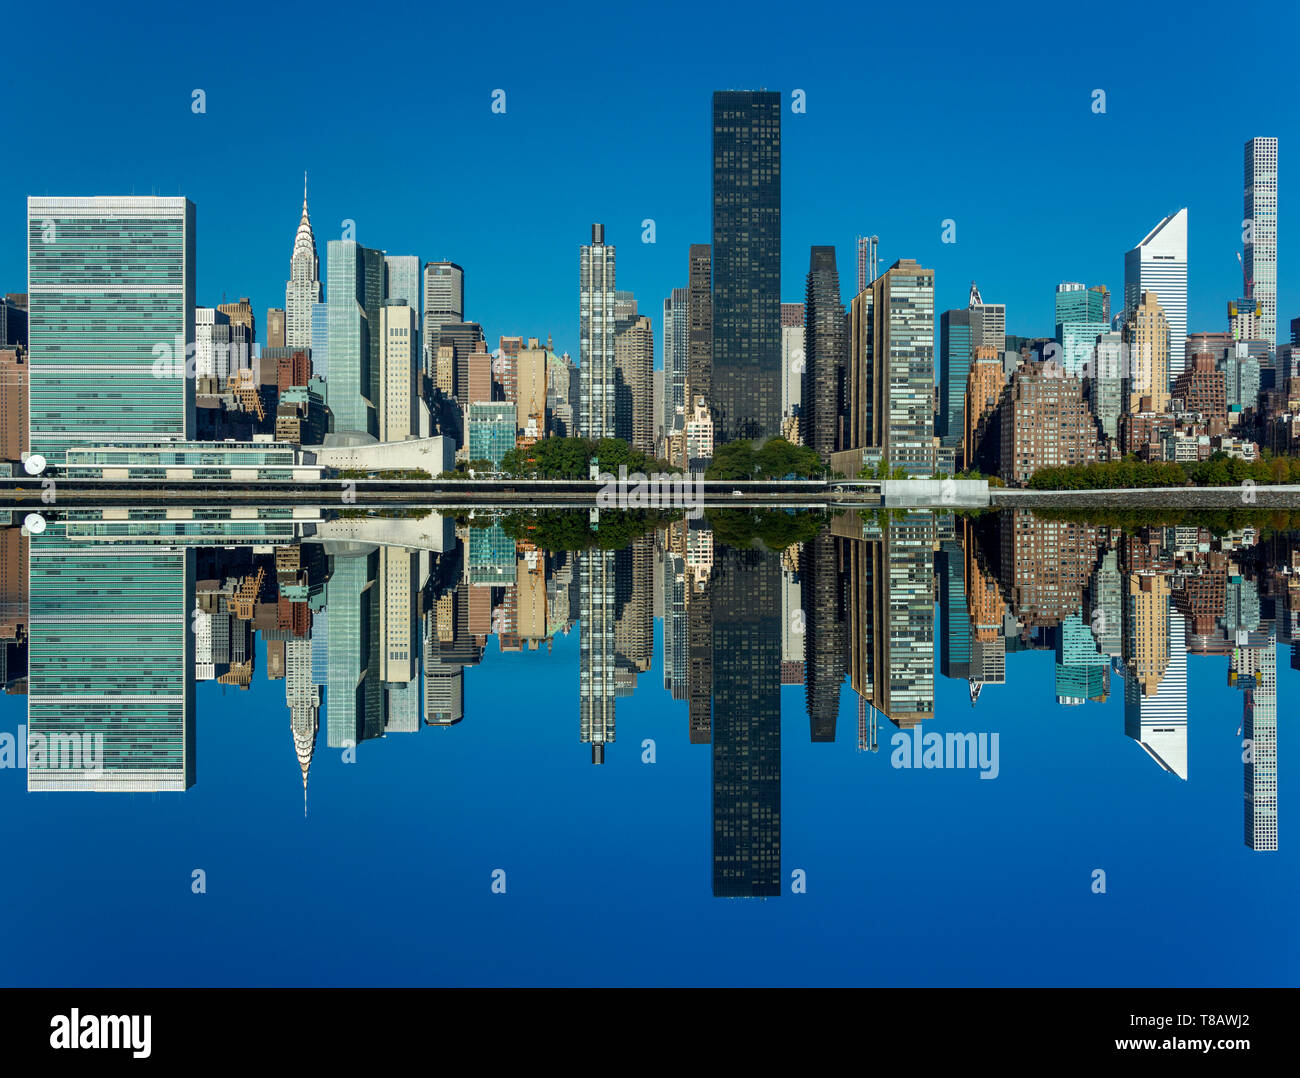 MIDTOWN EAST RIVER SKYLINE MANHATTAN NEW YORK USA Banque D'Images